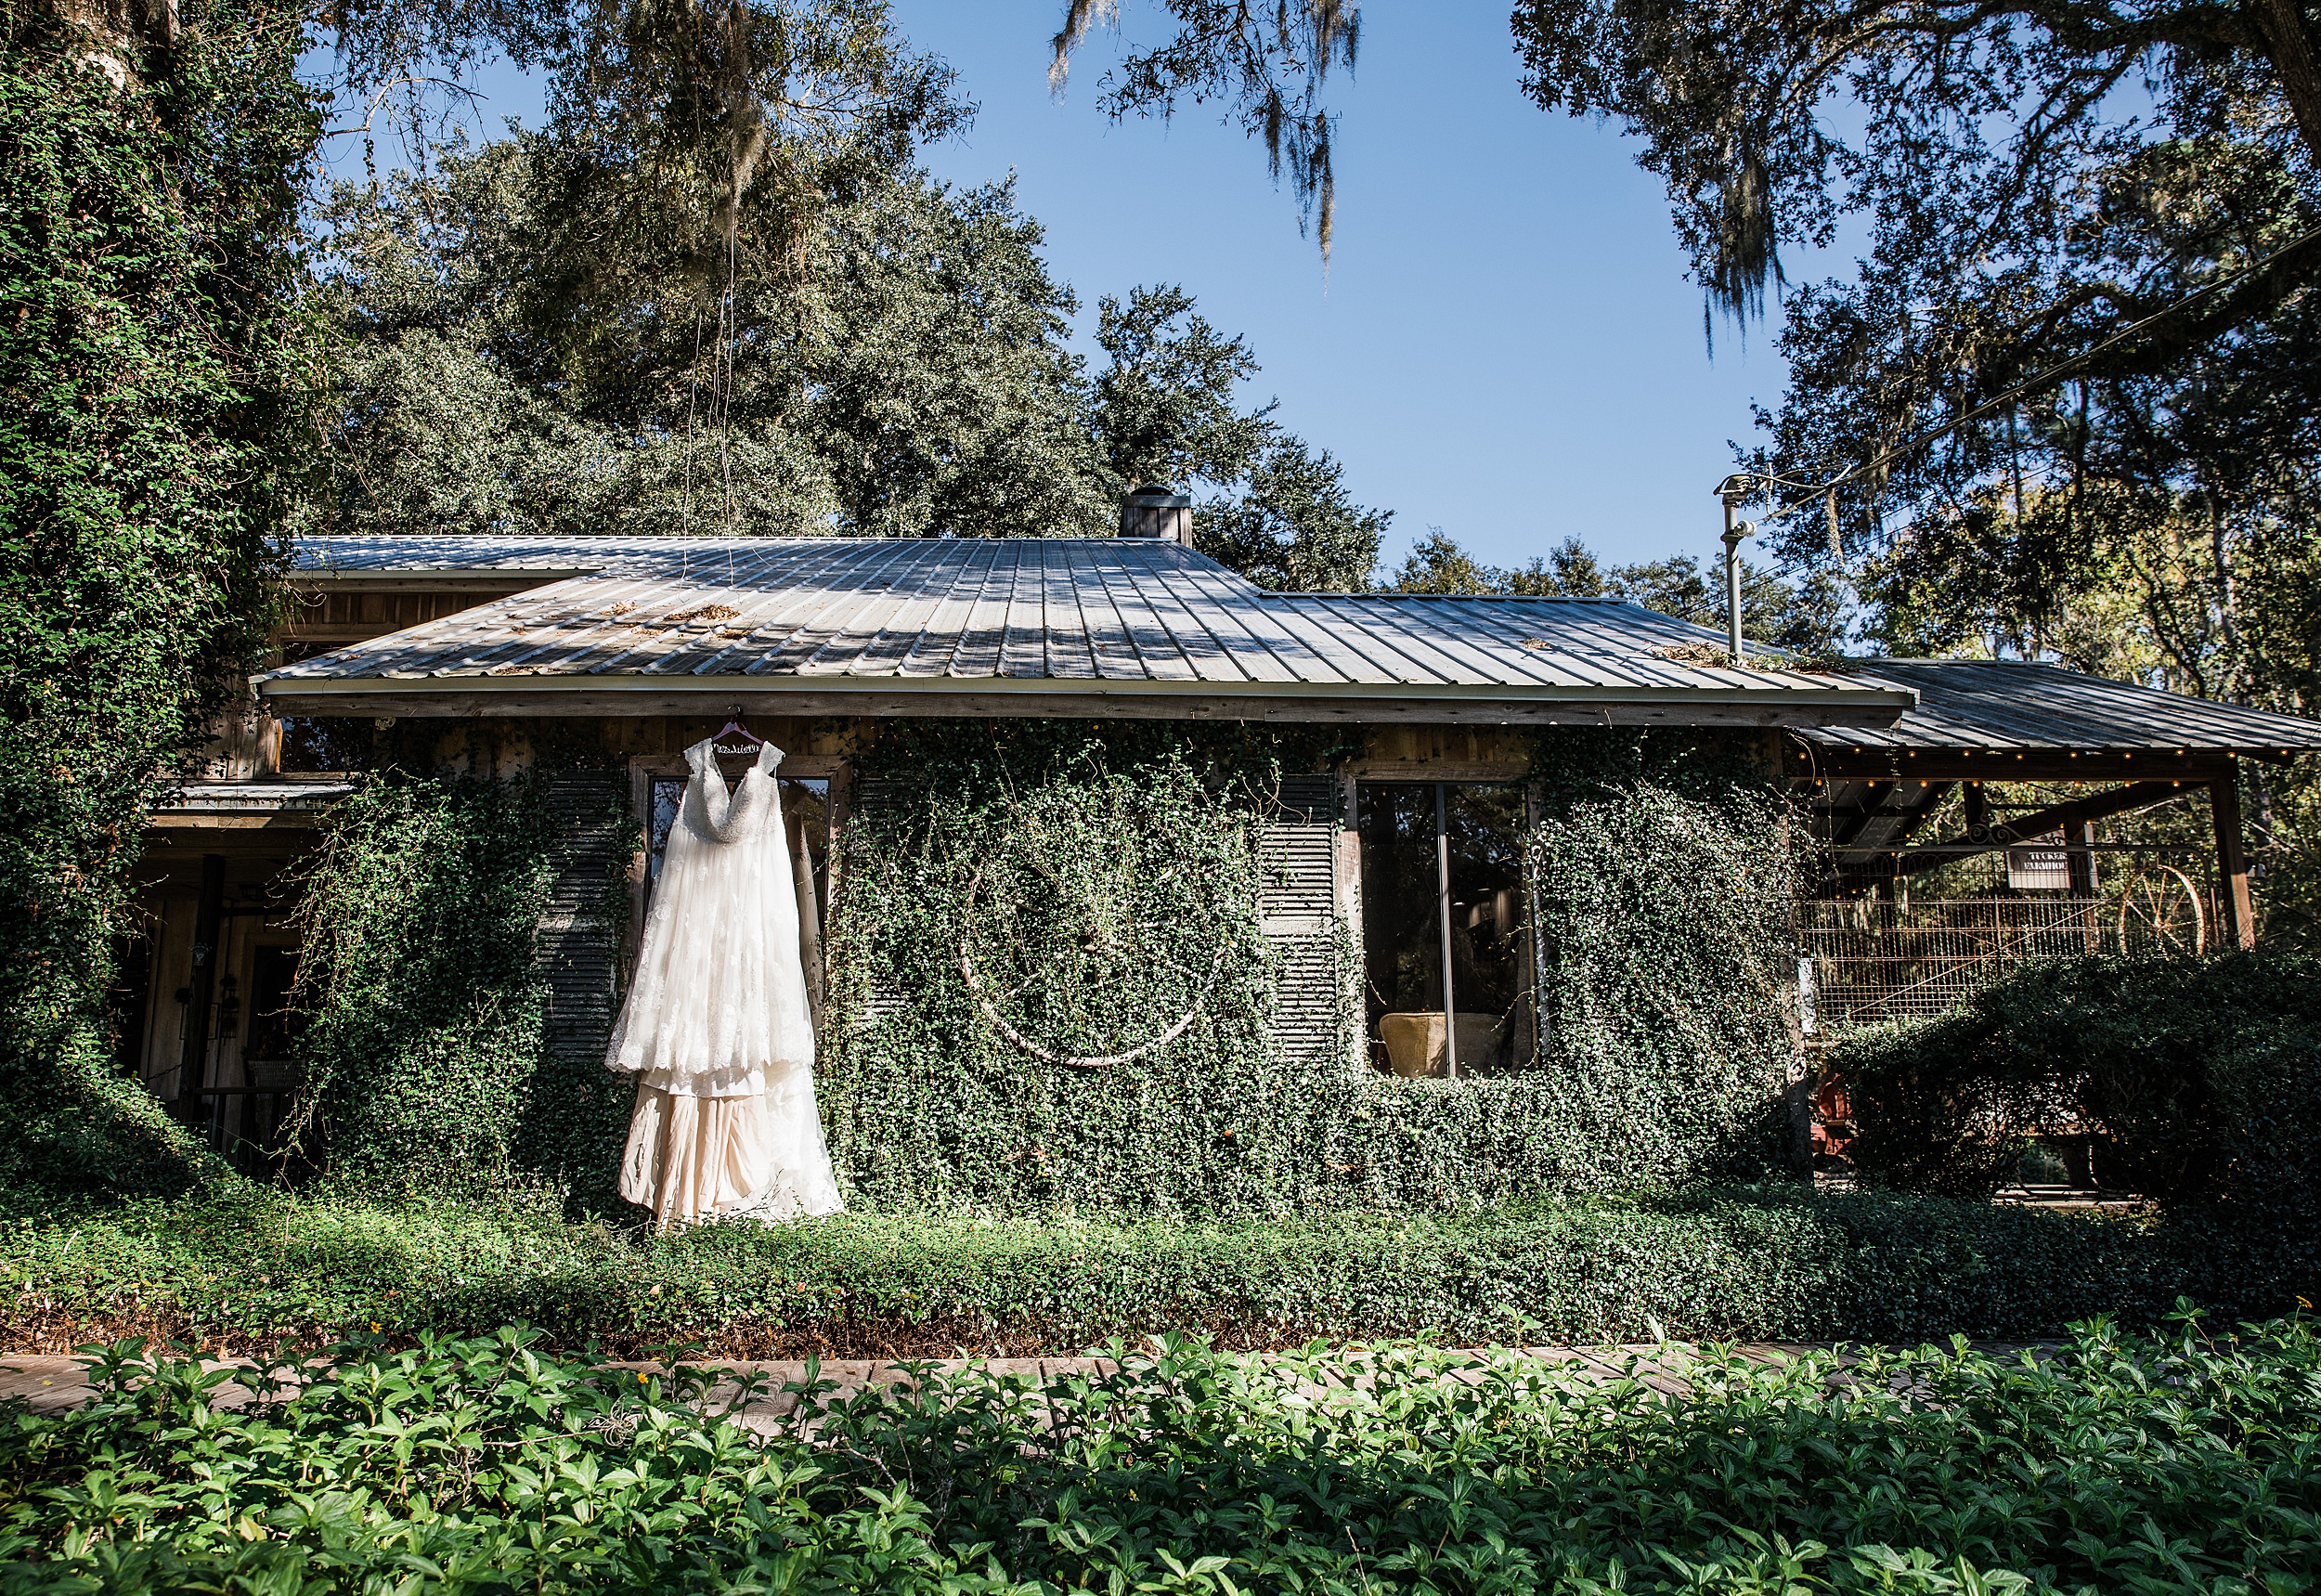 A wedding dress hangs on the vine covered bridal suite a tucker's farmhouse wedding venue